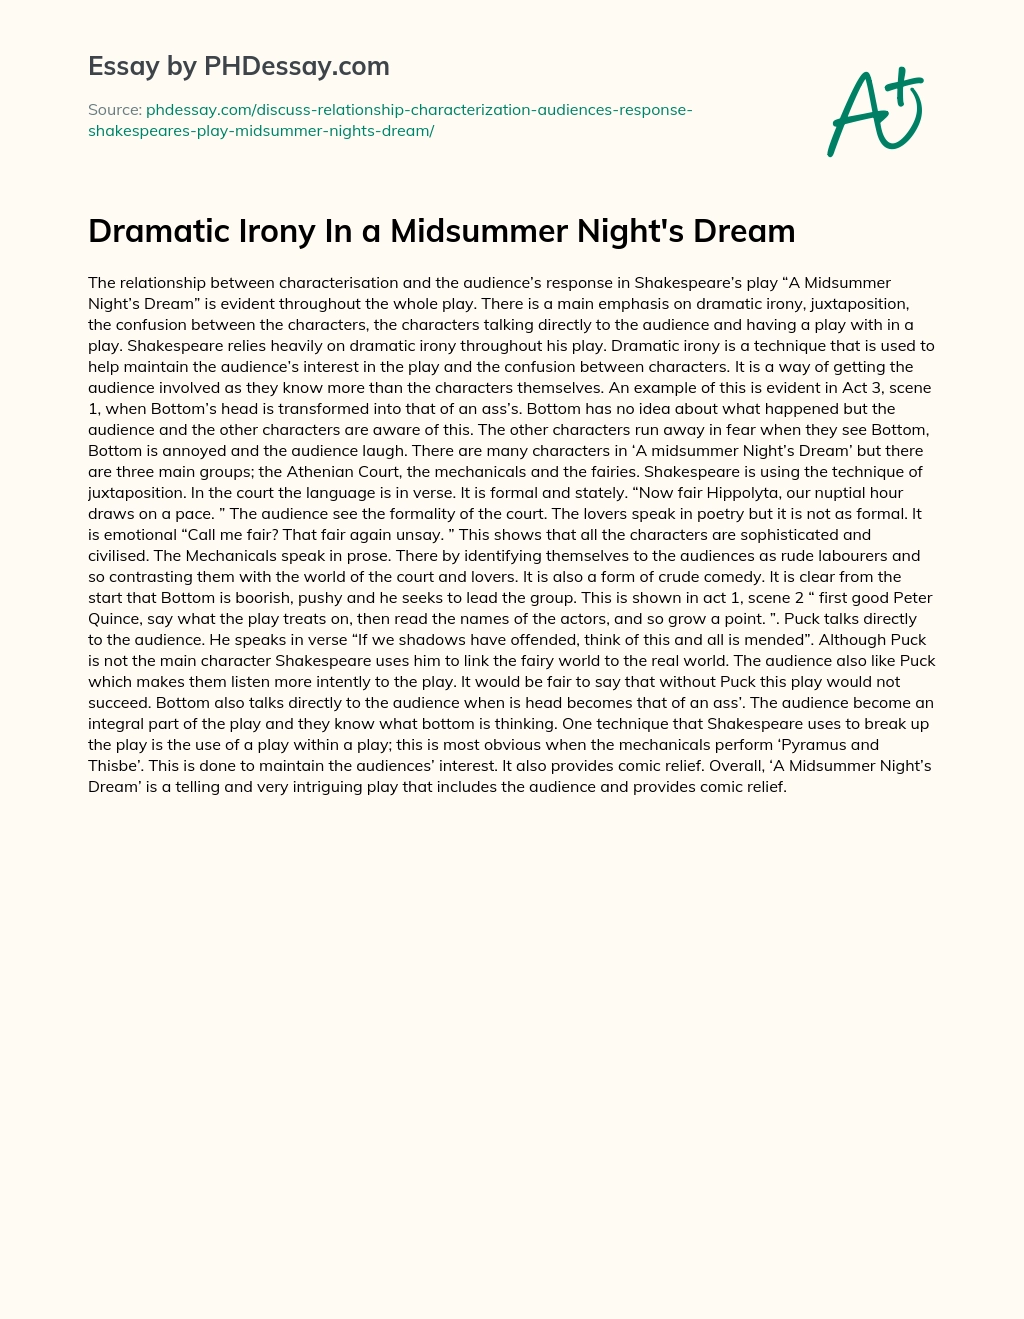 Dramatic Irony In a Midsummer Night’s Dream essay